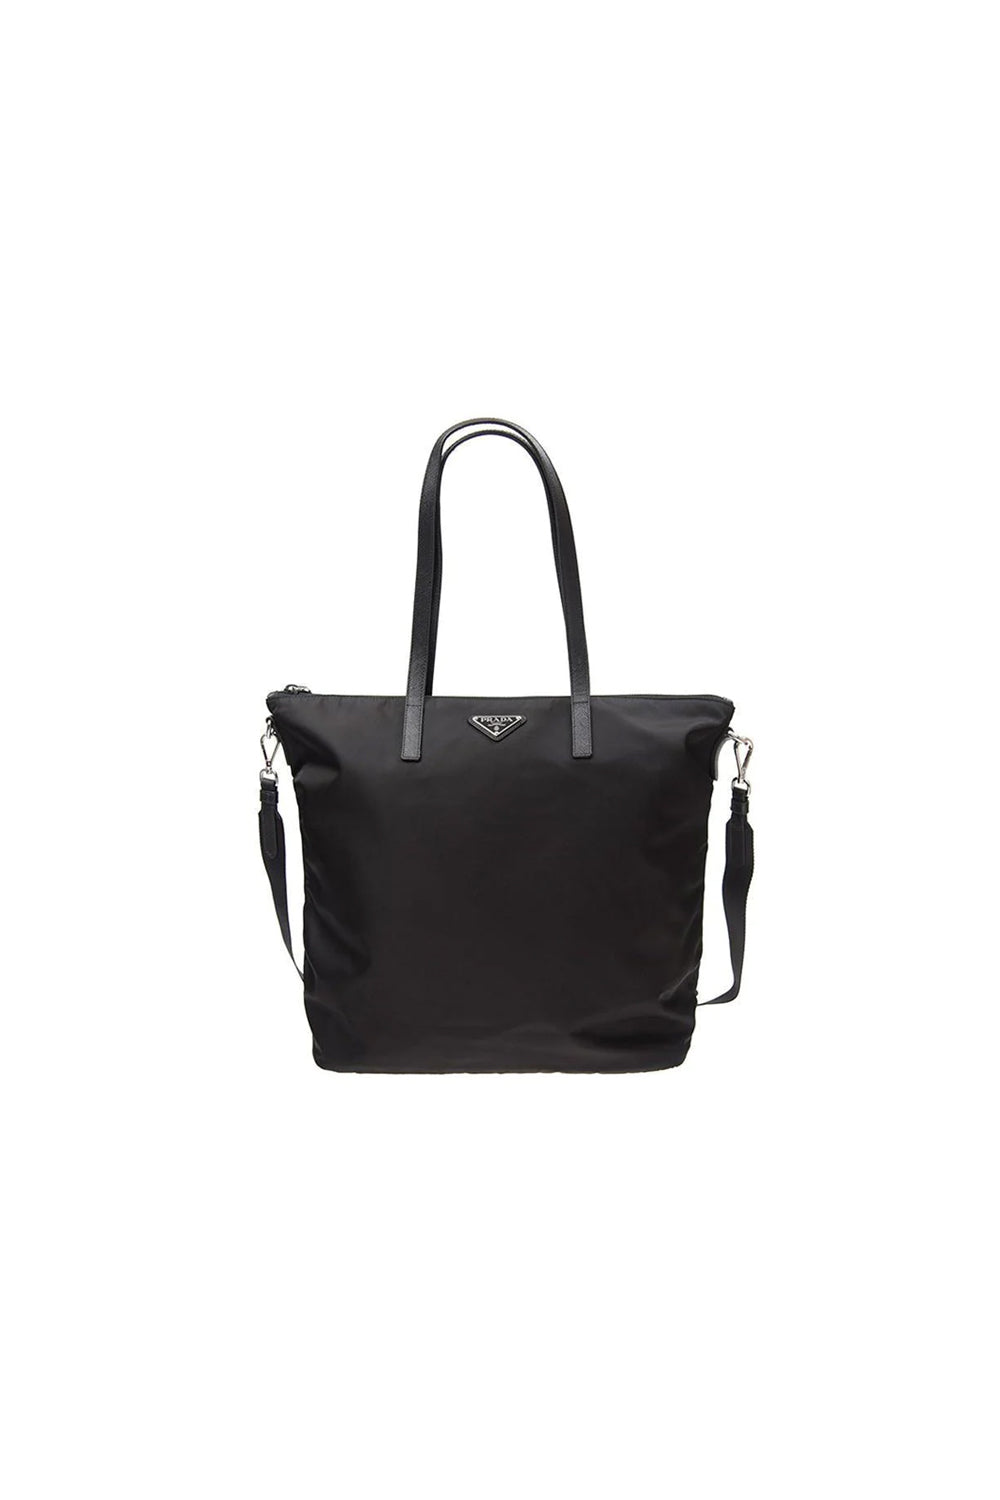 Prada Tessuto Nylon Black Convertible Shopping Bag